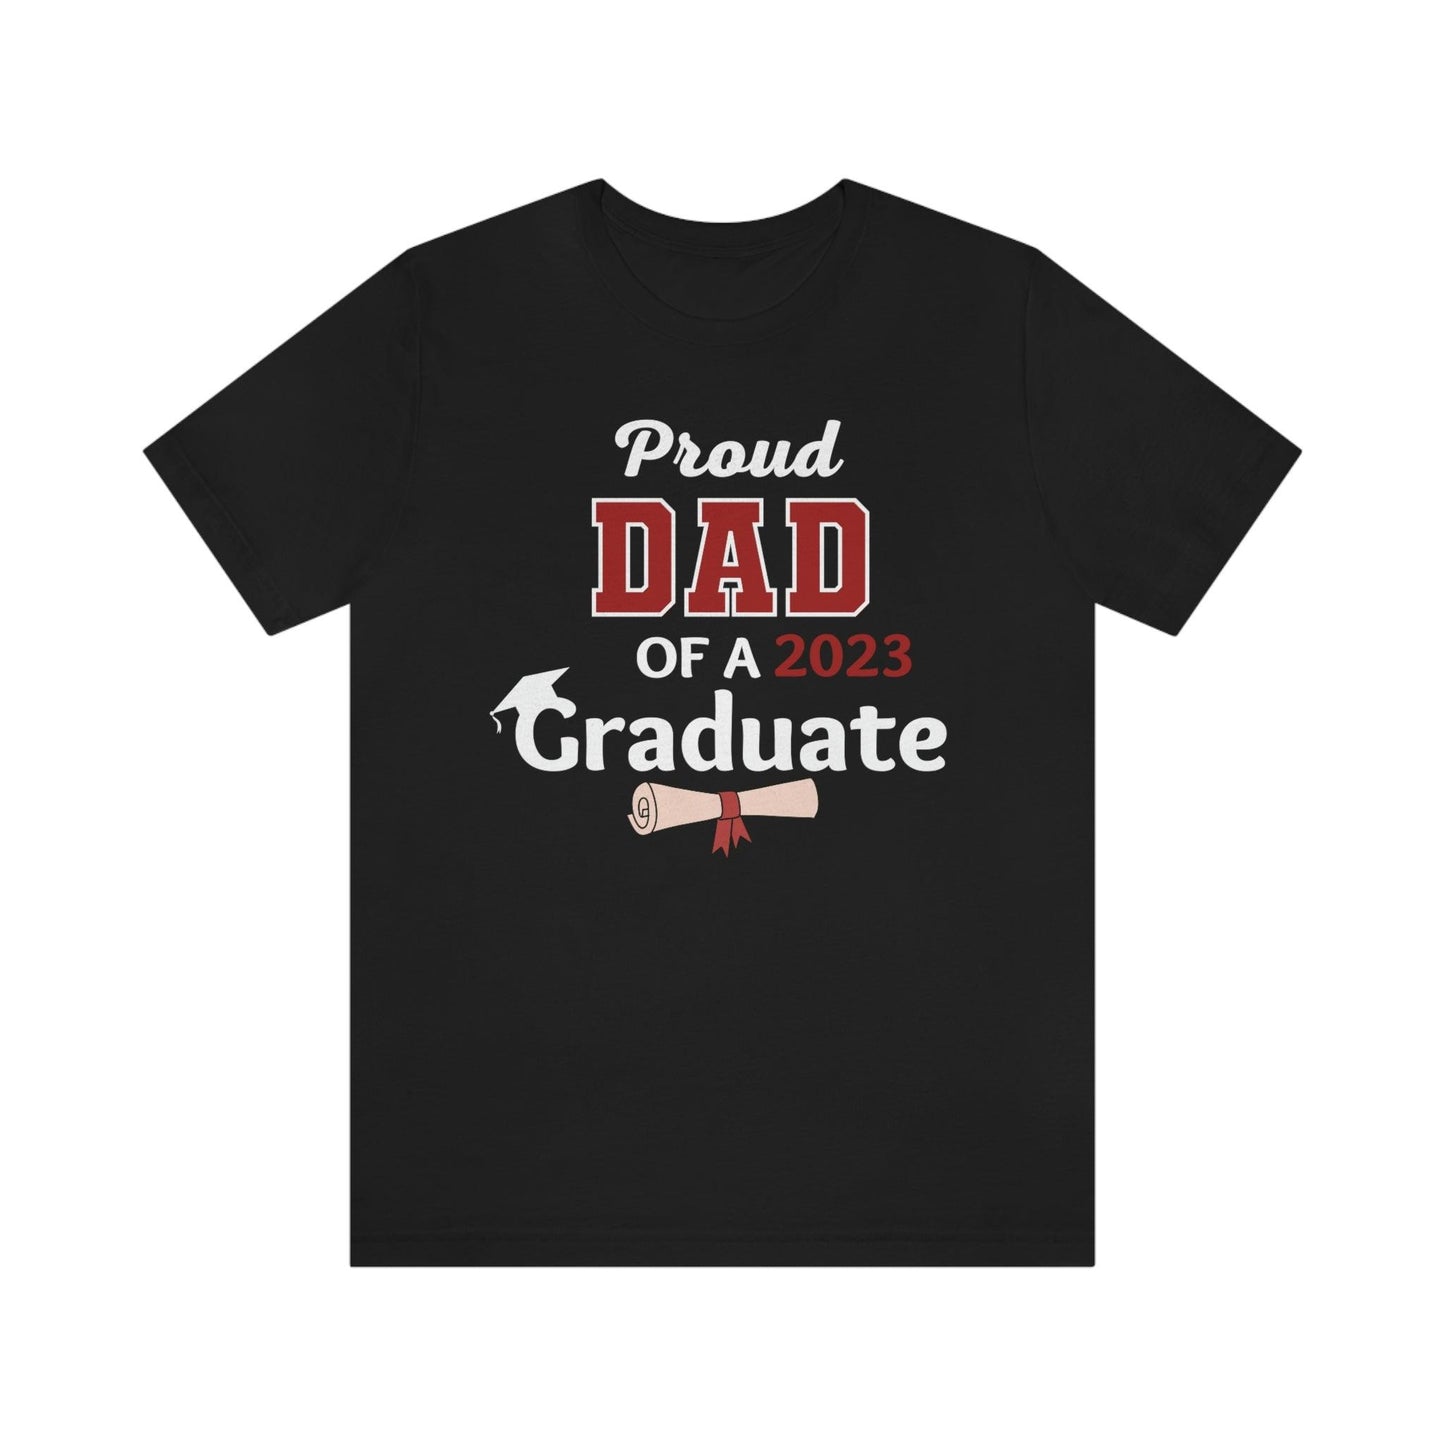 Proud Dad of a graduate - Graduation shirt - Graduation gift